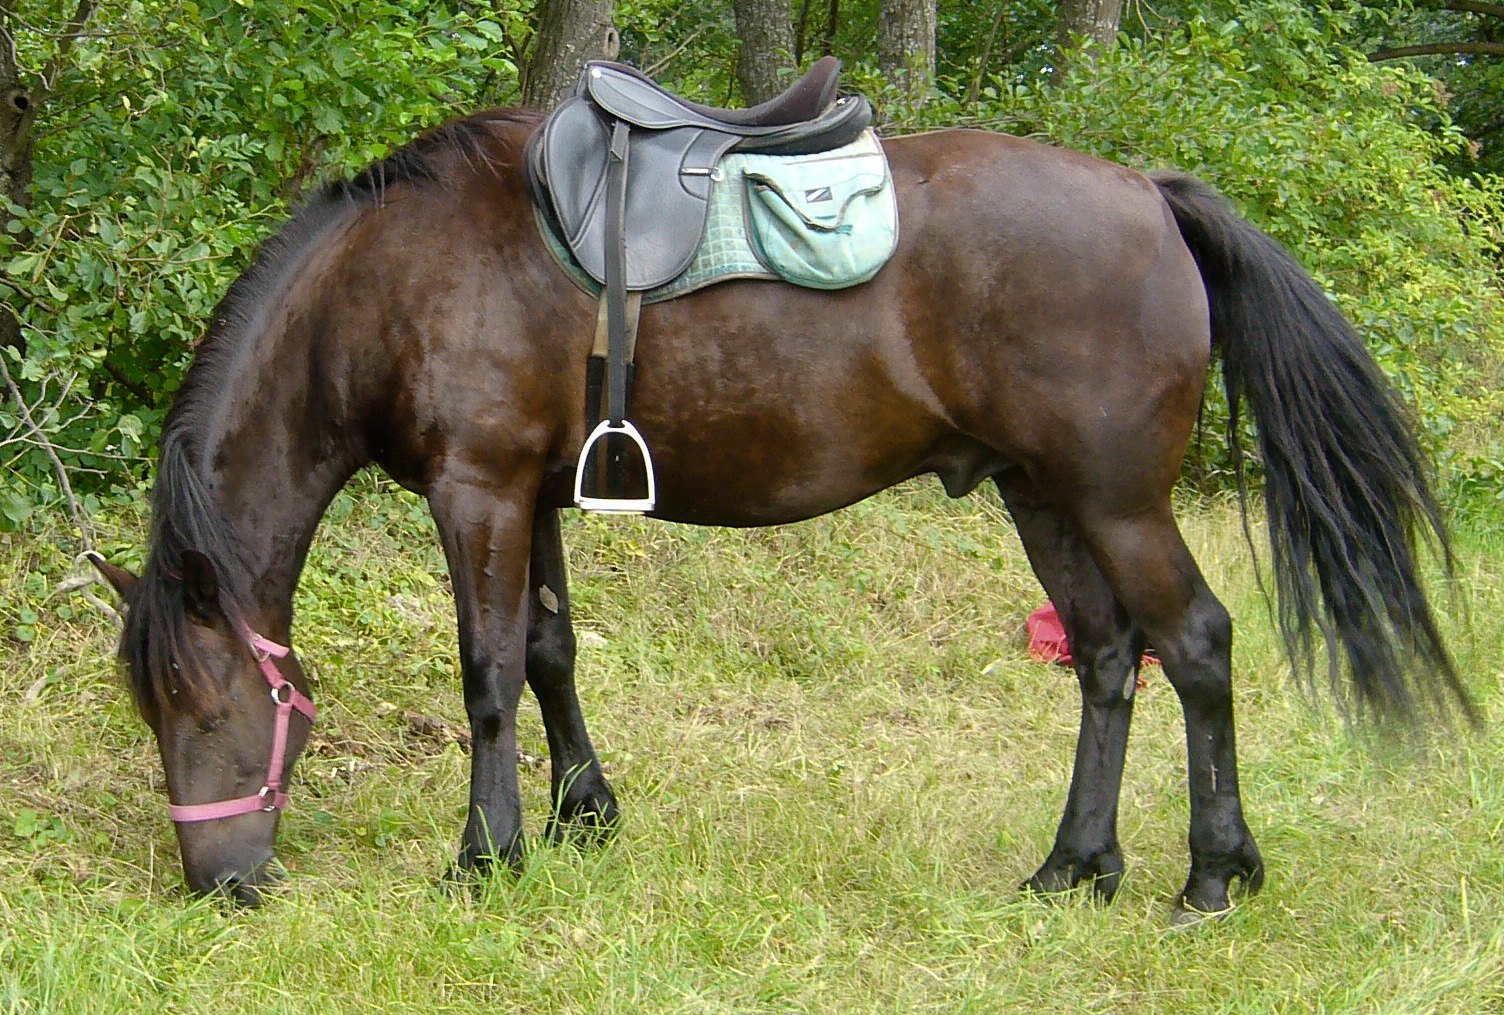 Auvergne horse breed profile, facts, lifespan, traits, training, habitat, speed, range, diet, groom, care, standard, health, pedigree, racing